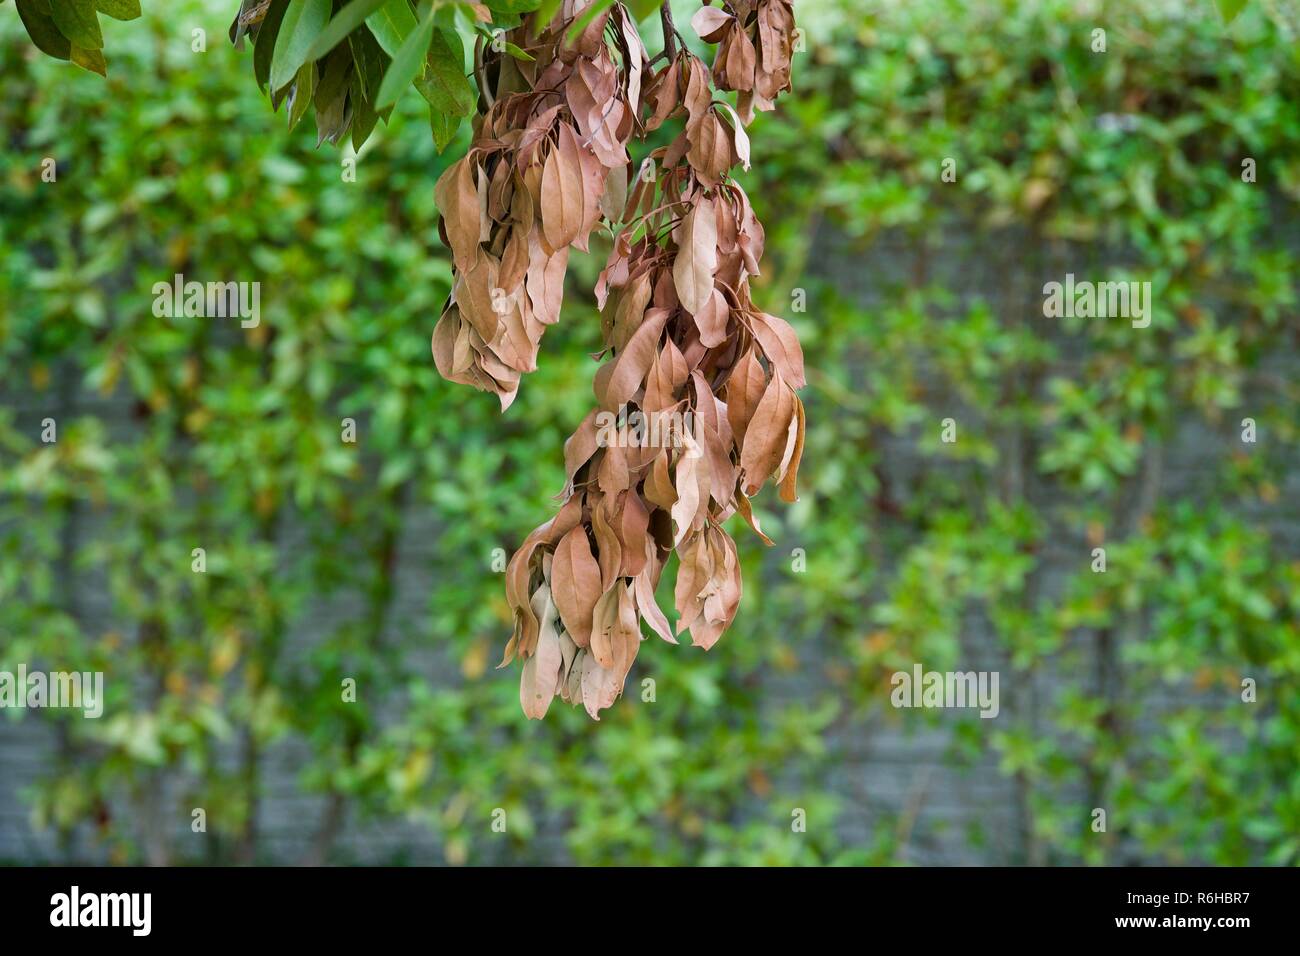 Dead brown leafs in fall season. Stock Photo